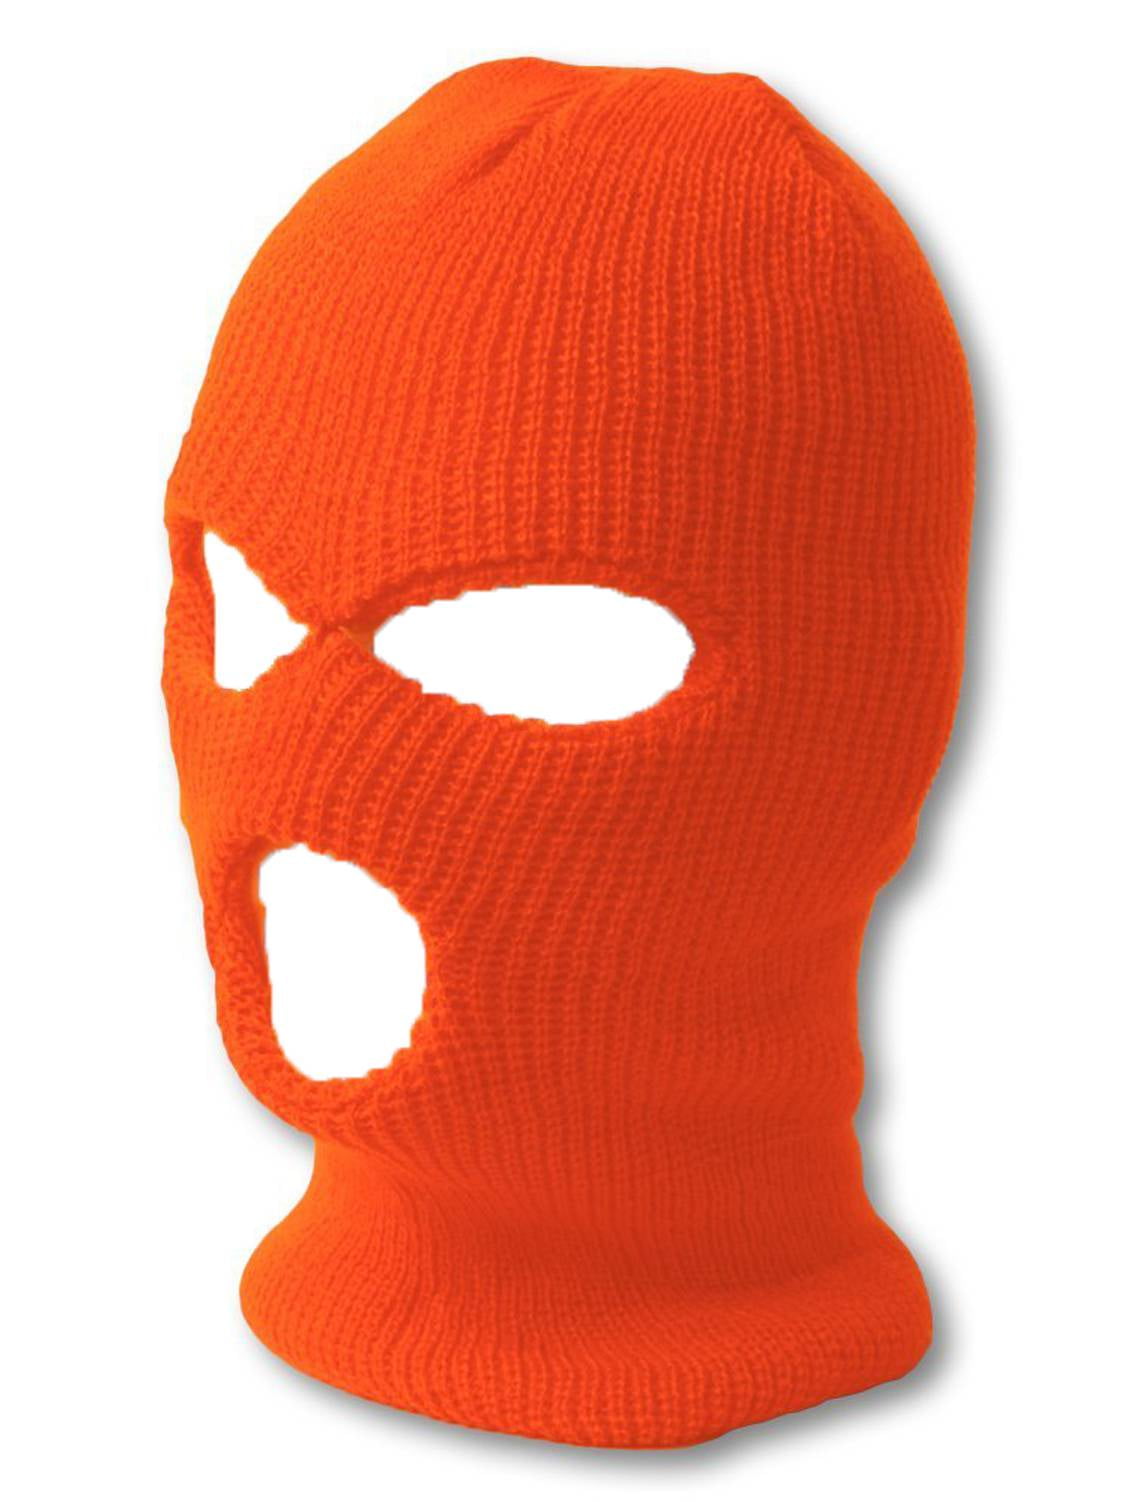 LV Neon Orange Ski Mask